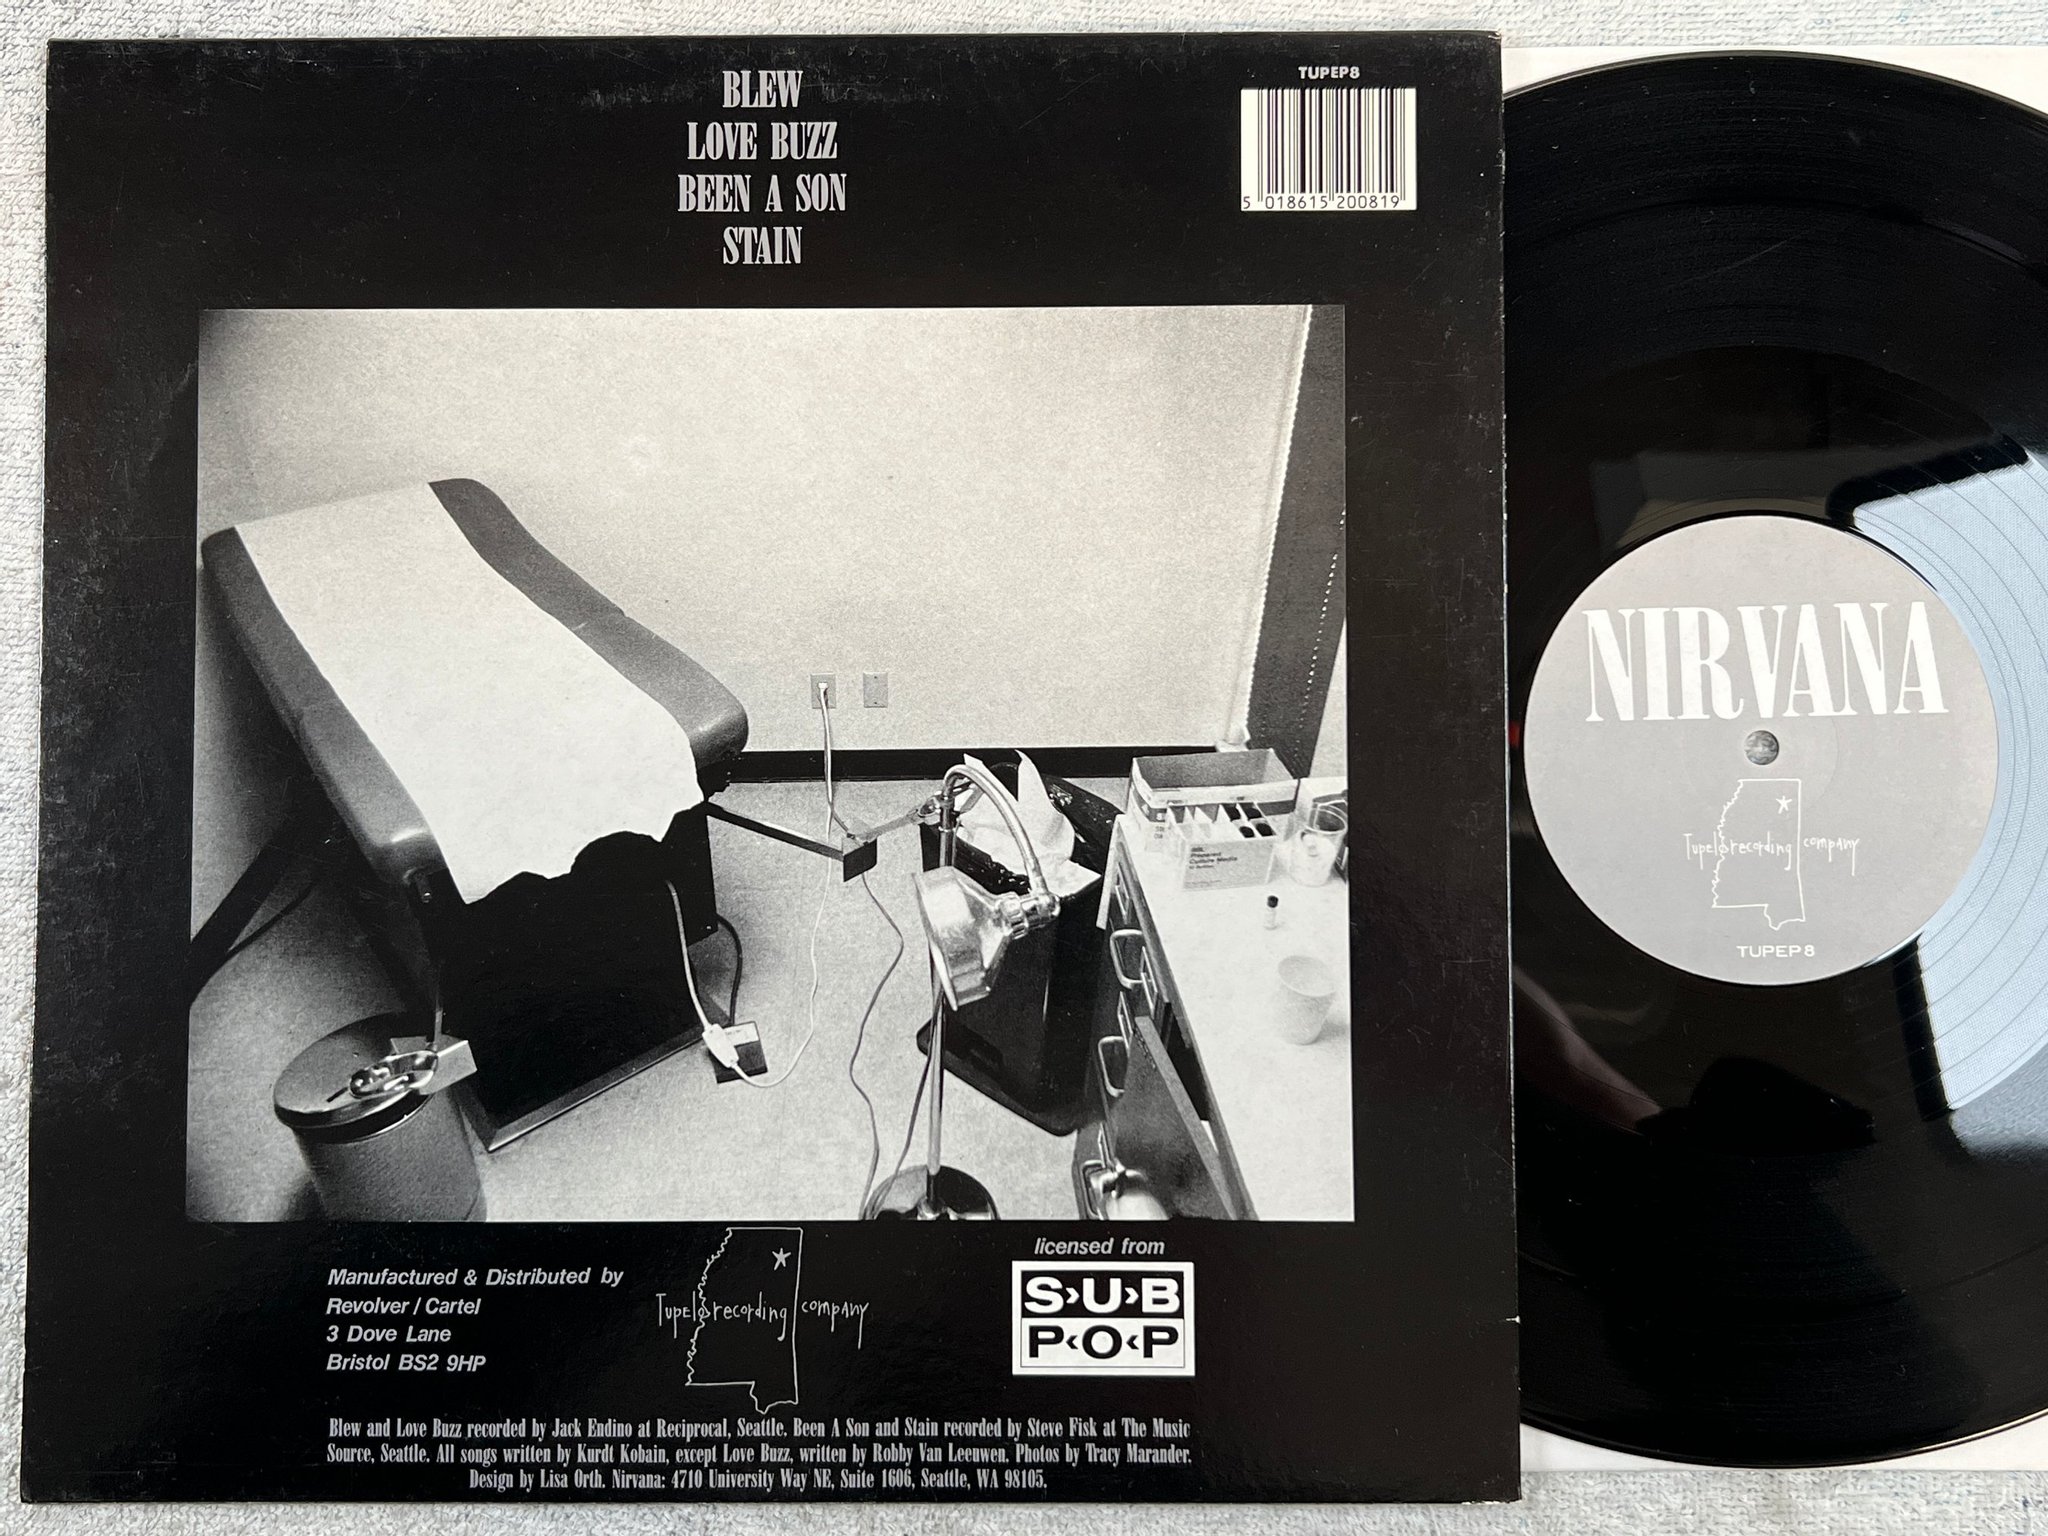 Omslagsbild för skivan NIRVANA Blew 12"ep -89 UK TULEPO TUPEP8 *** Mega Rare *** grunge